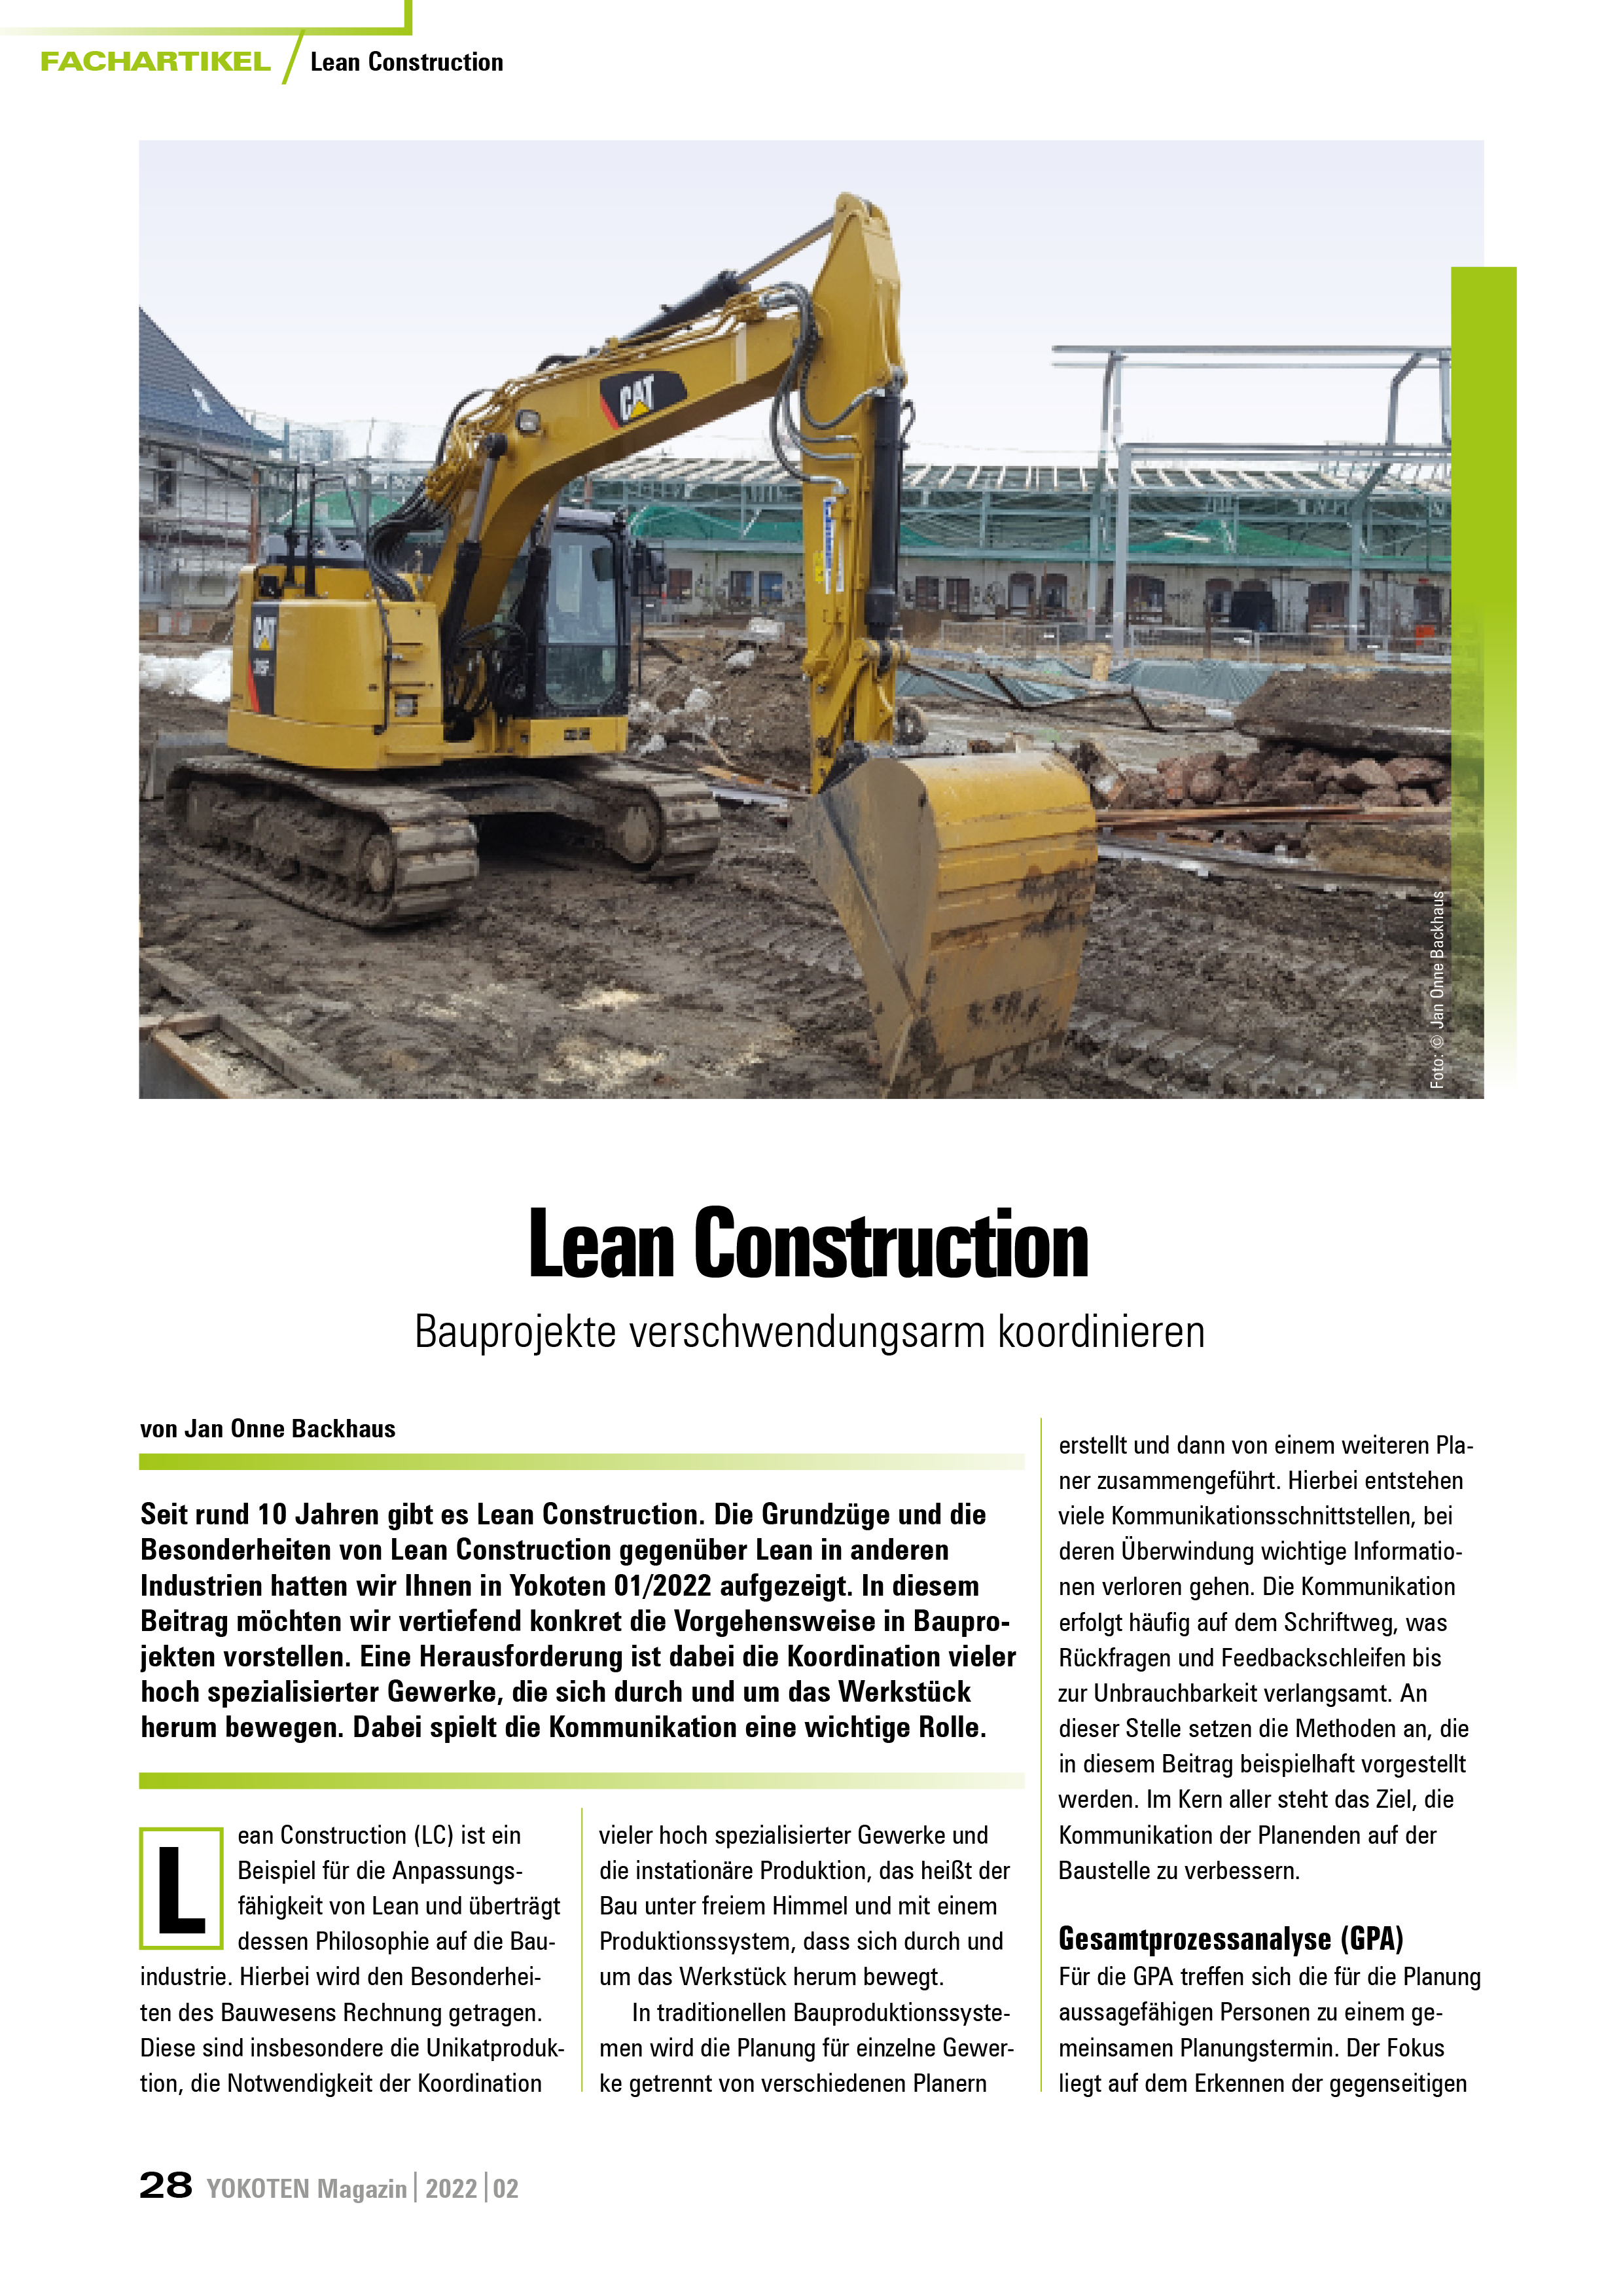 Lean Construction - Artikel aus Fachmagazin YOKOTEN 2022-02